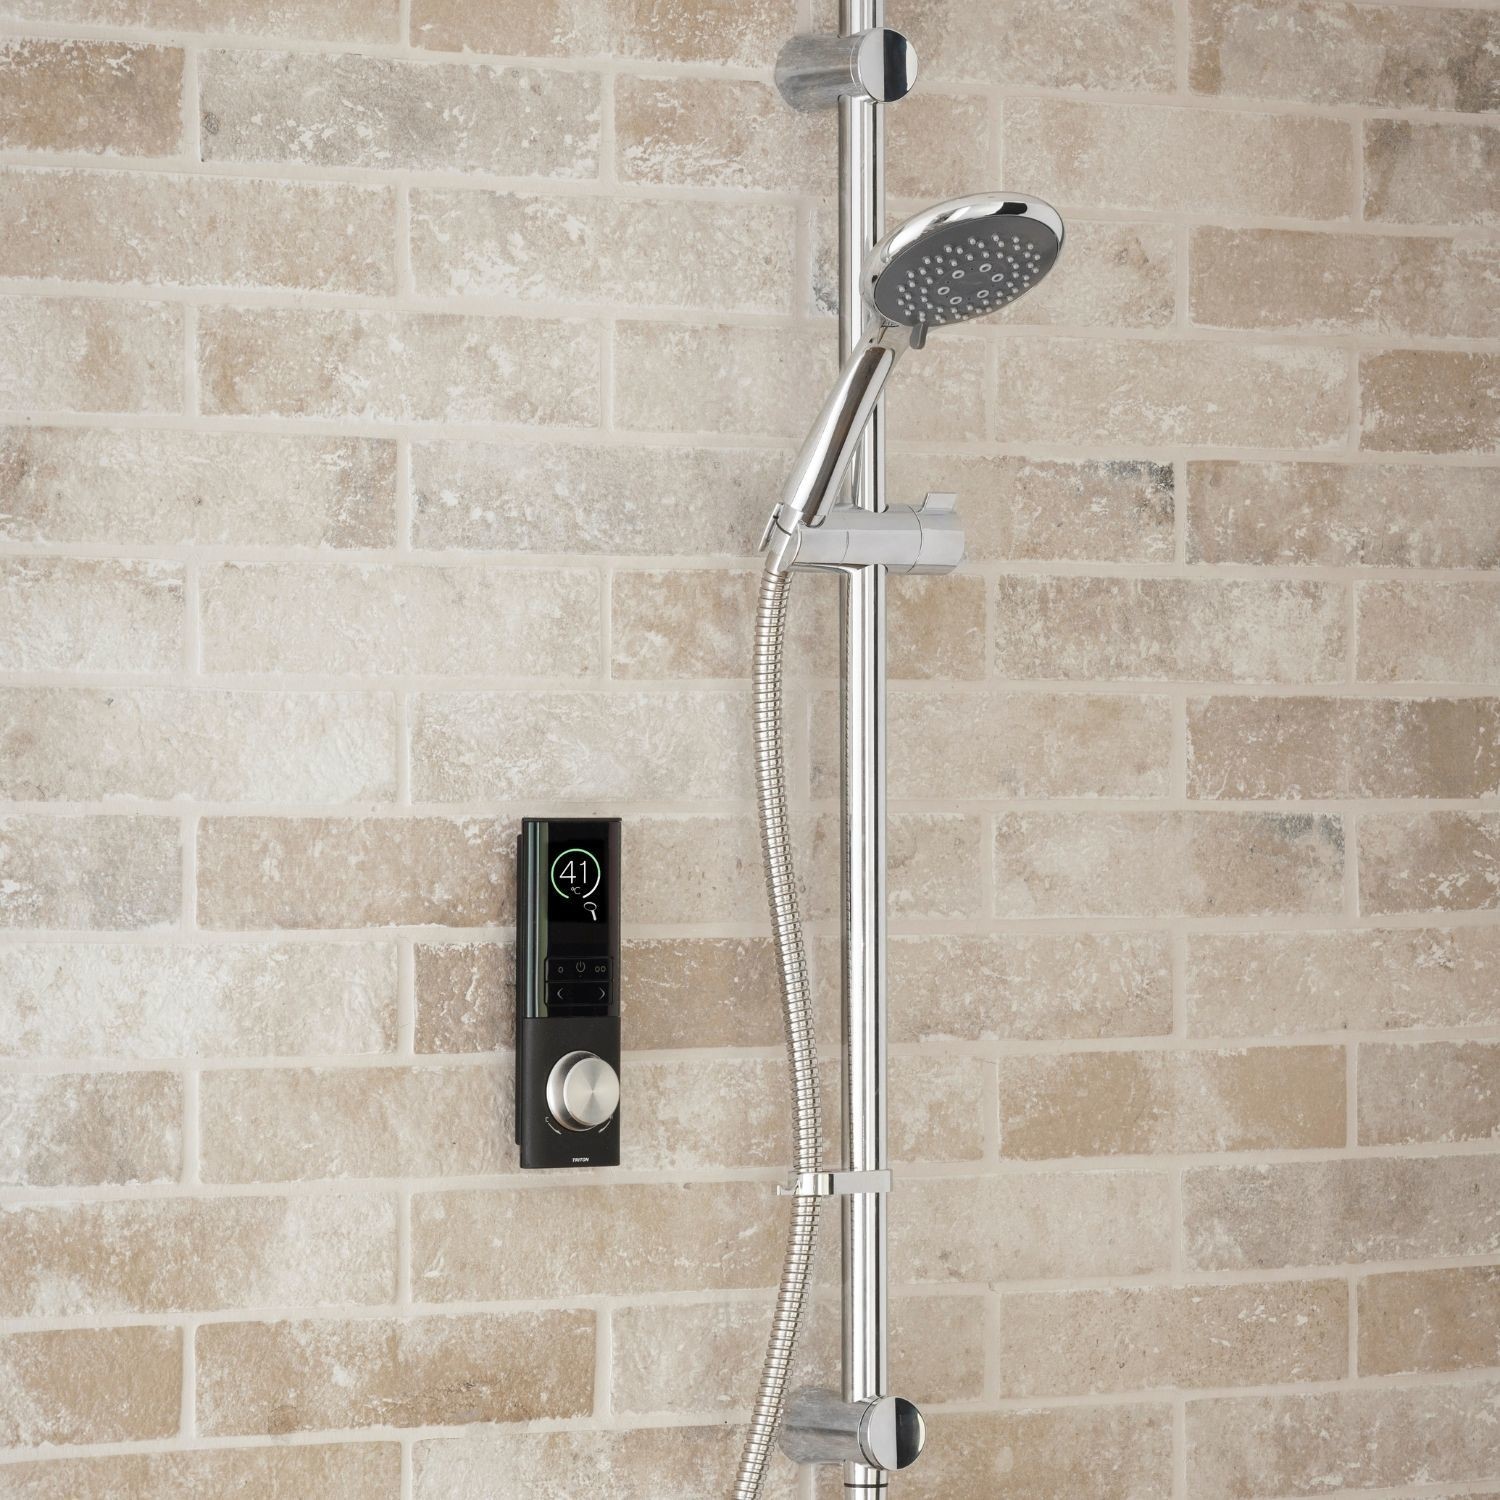 Triton Home Digital Mixer Shower - Unpumped